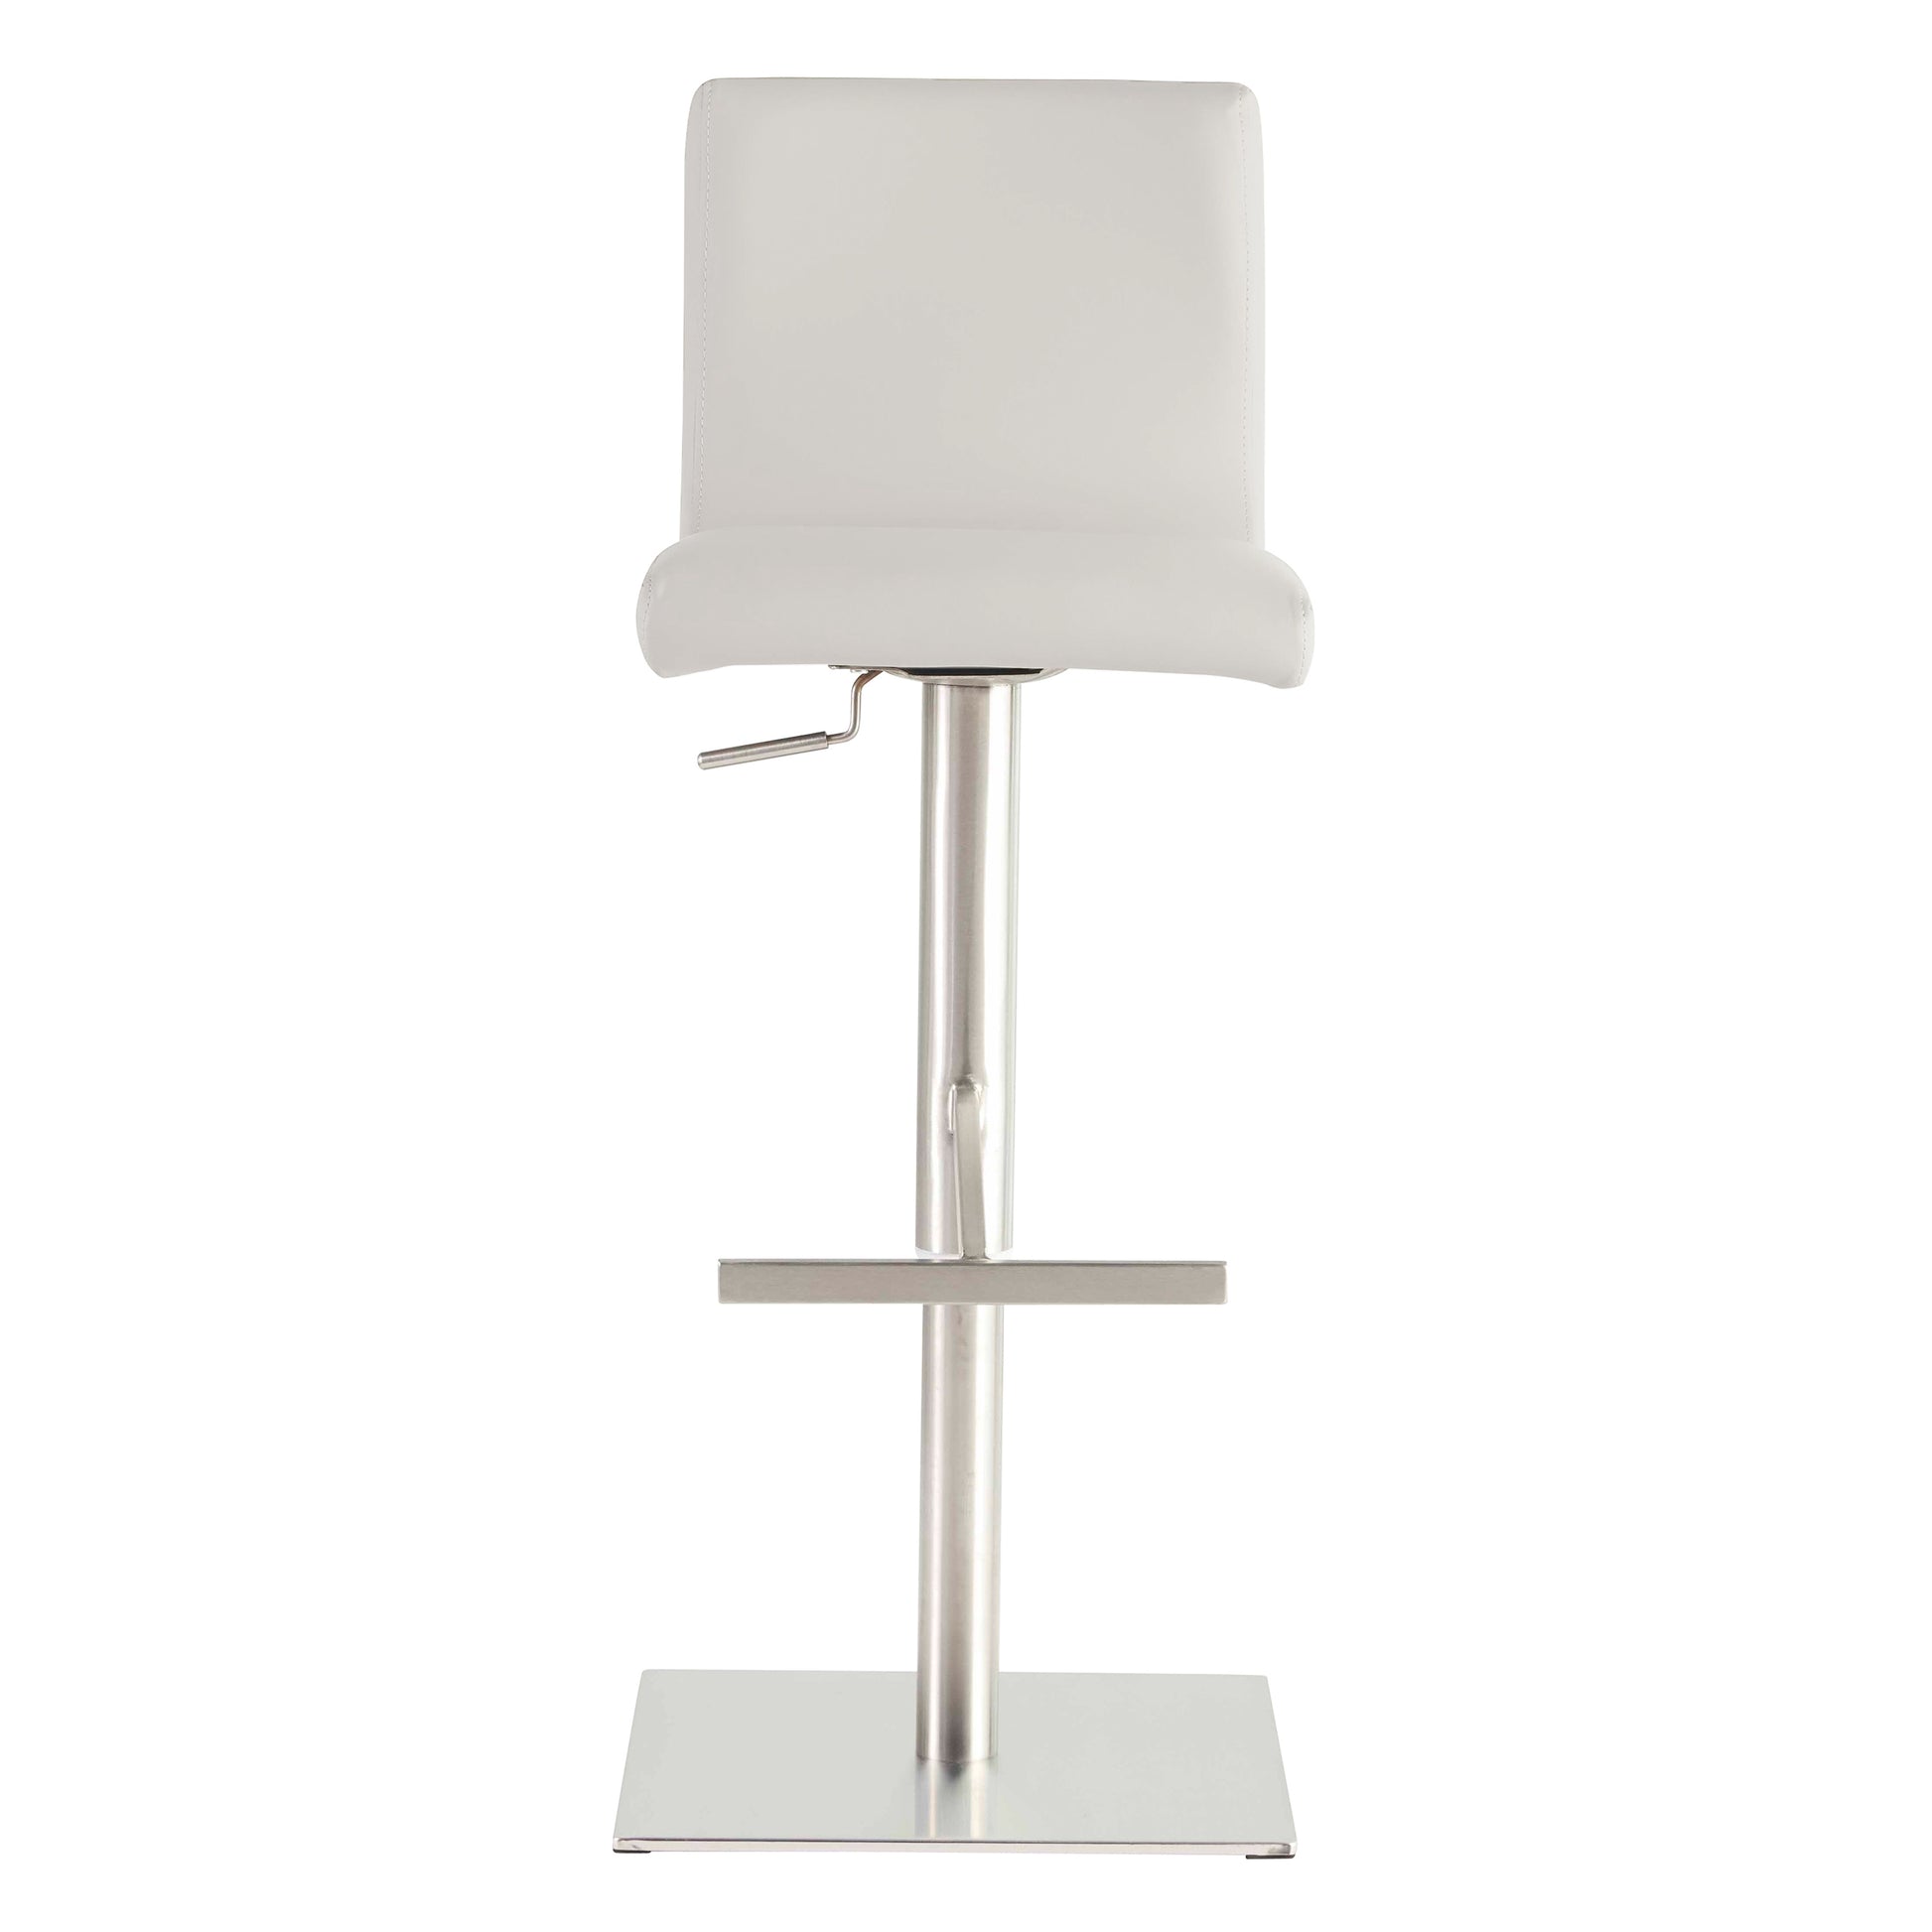 Euro - Scott adjustable barstool (set of 1) - Eurohaus Modern Furniture LLC